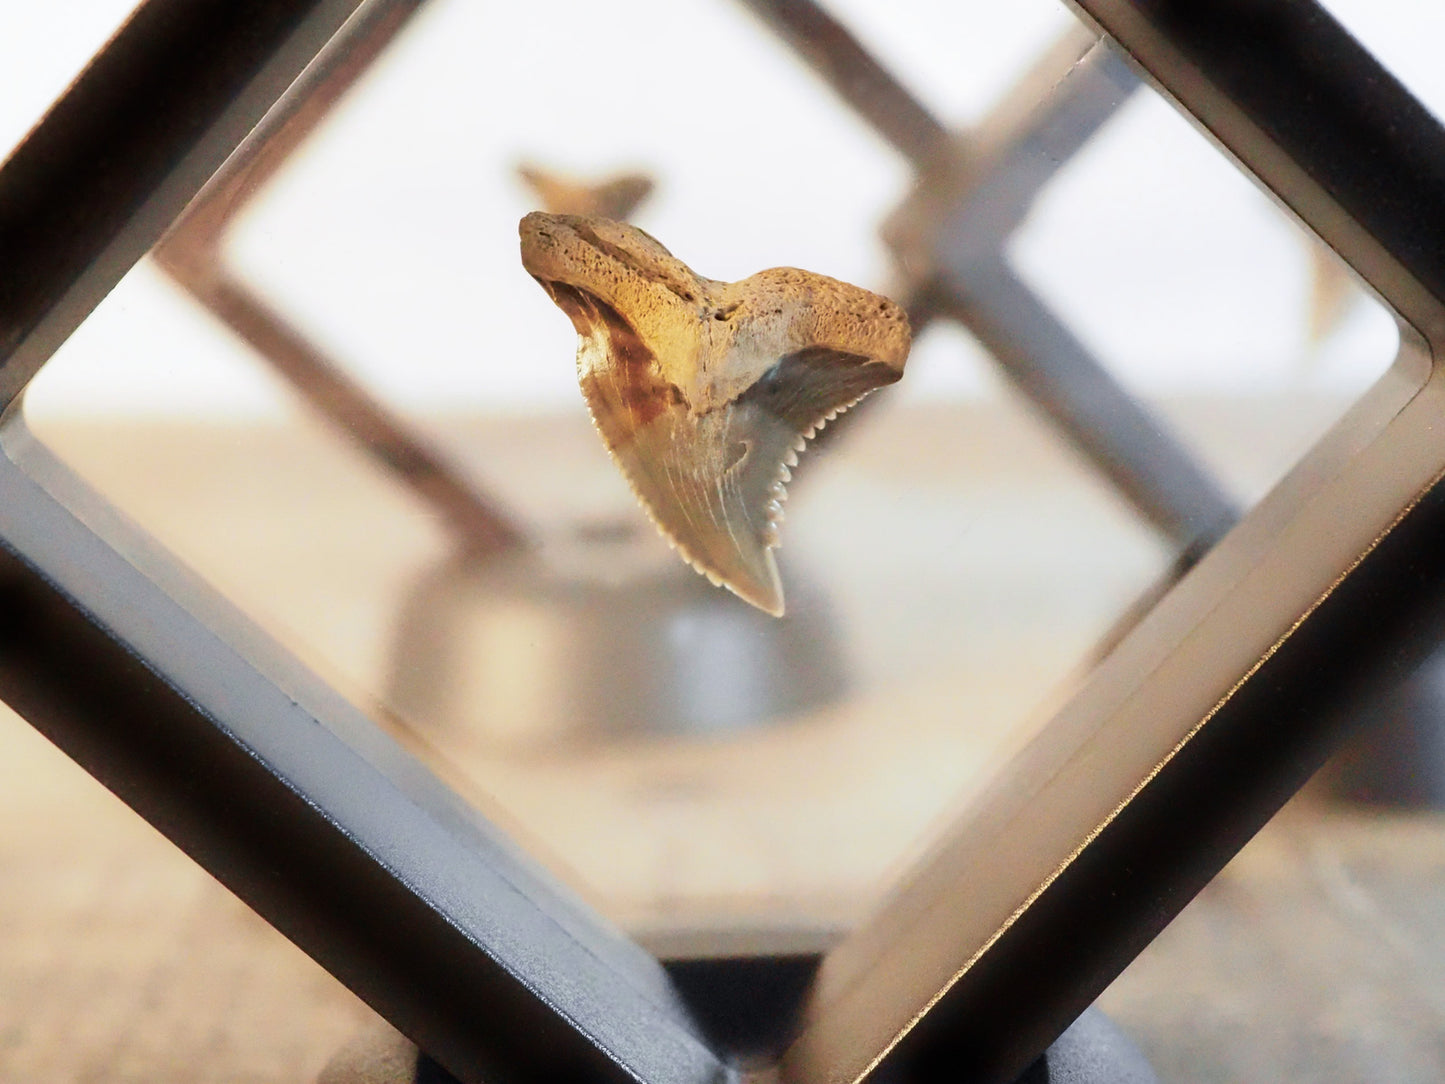 Hemipristis Serra Fossilized Shark Teeth in Floating Frames